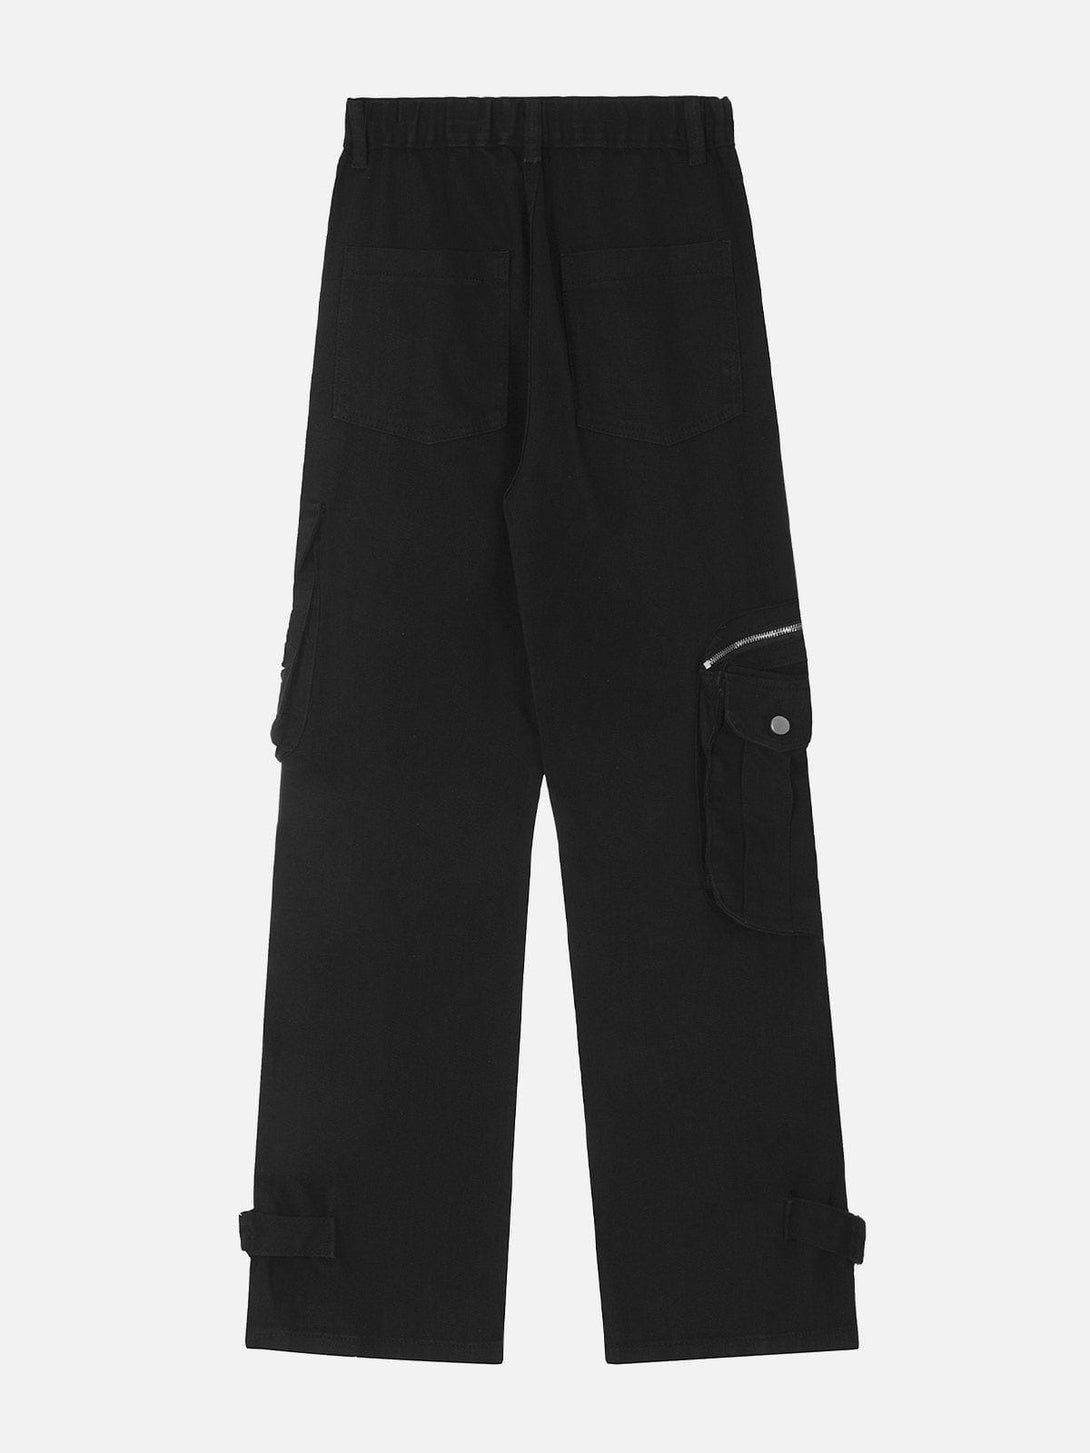 Majesda® - Multi-pocket Cargo Pants outfit ideas streetwear fashion